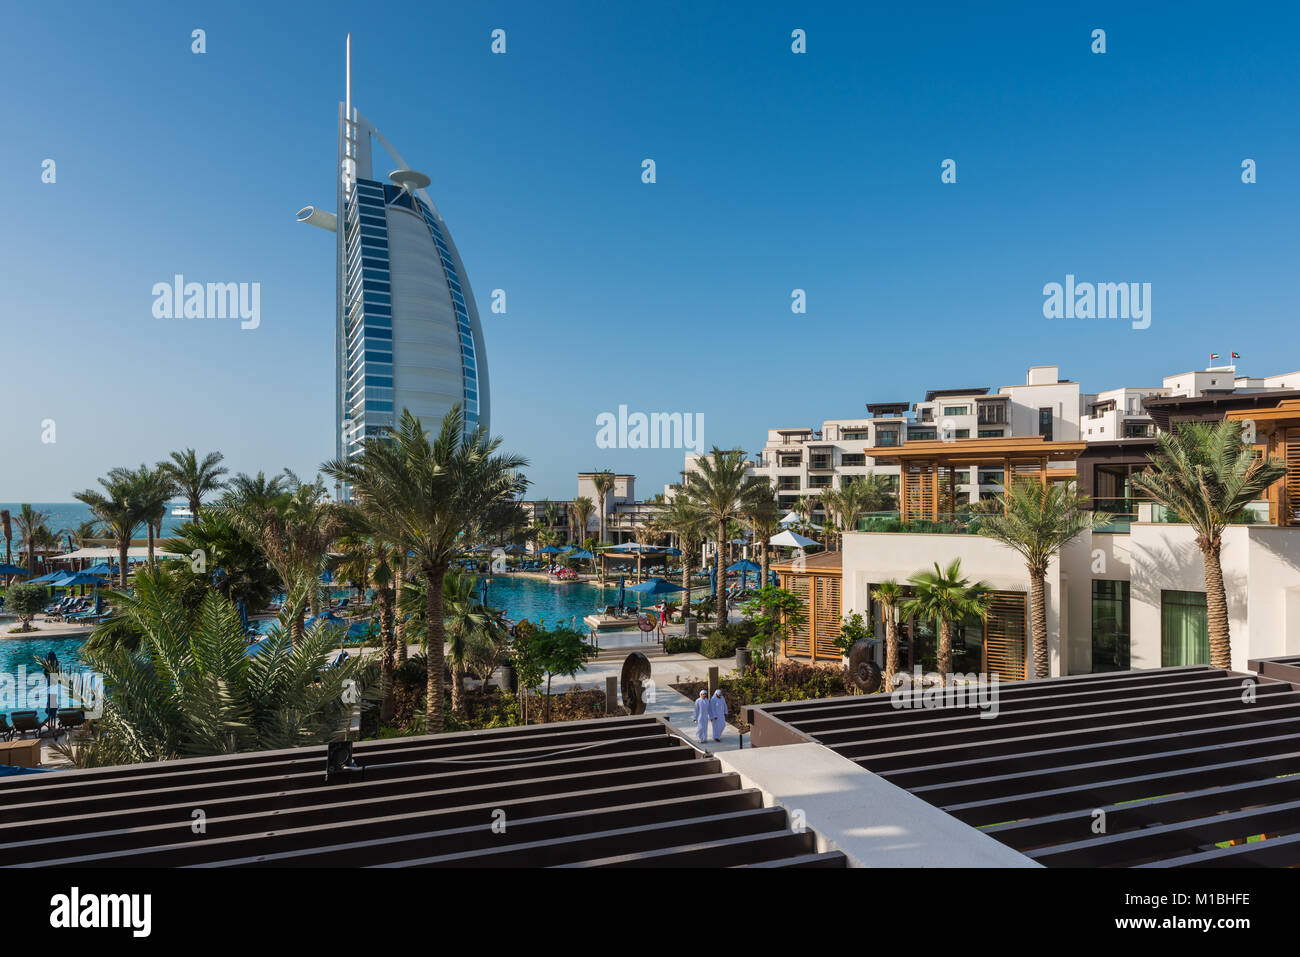 Views of the luxury beachfront hotel Burj Al Arab located on a man-made island in Dubai, UAE, United Arab Emirates Stock Photo